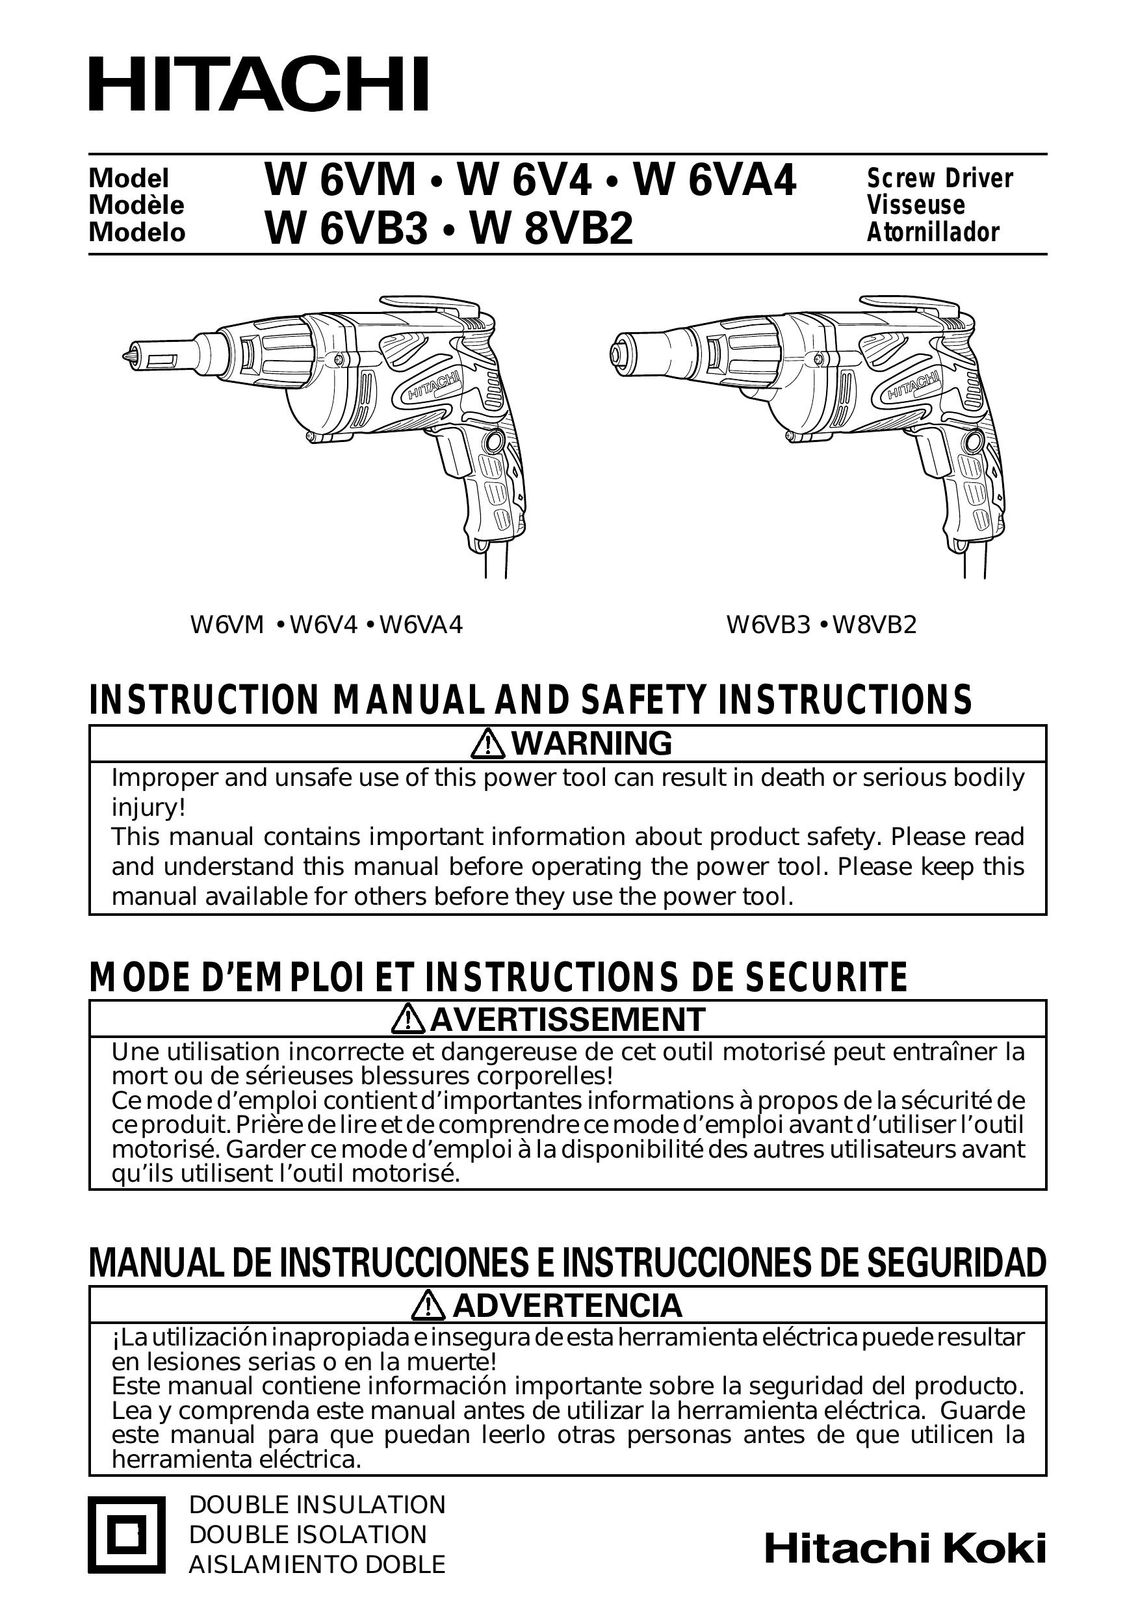 Hitachi Koki USA W8VB2 Cordless Drill User Manual